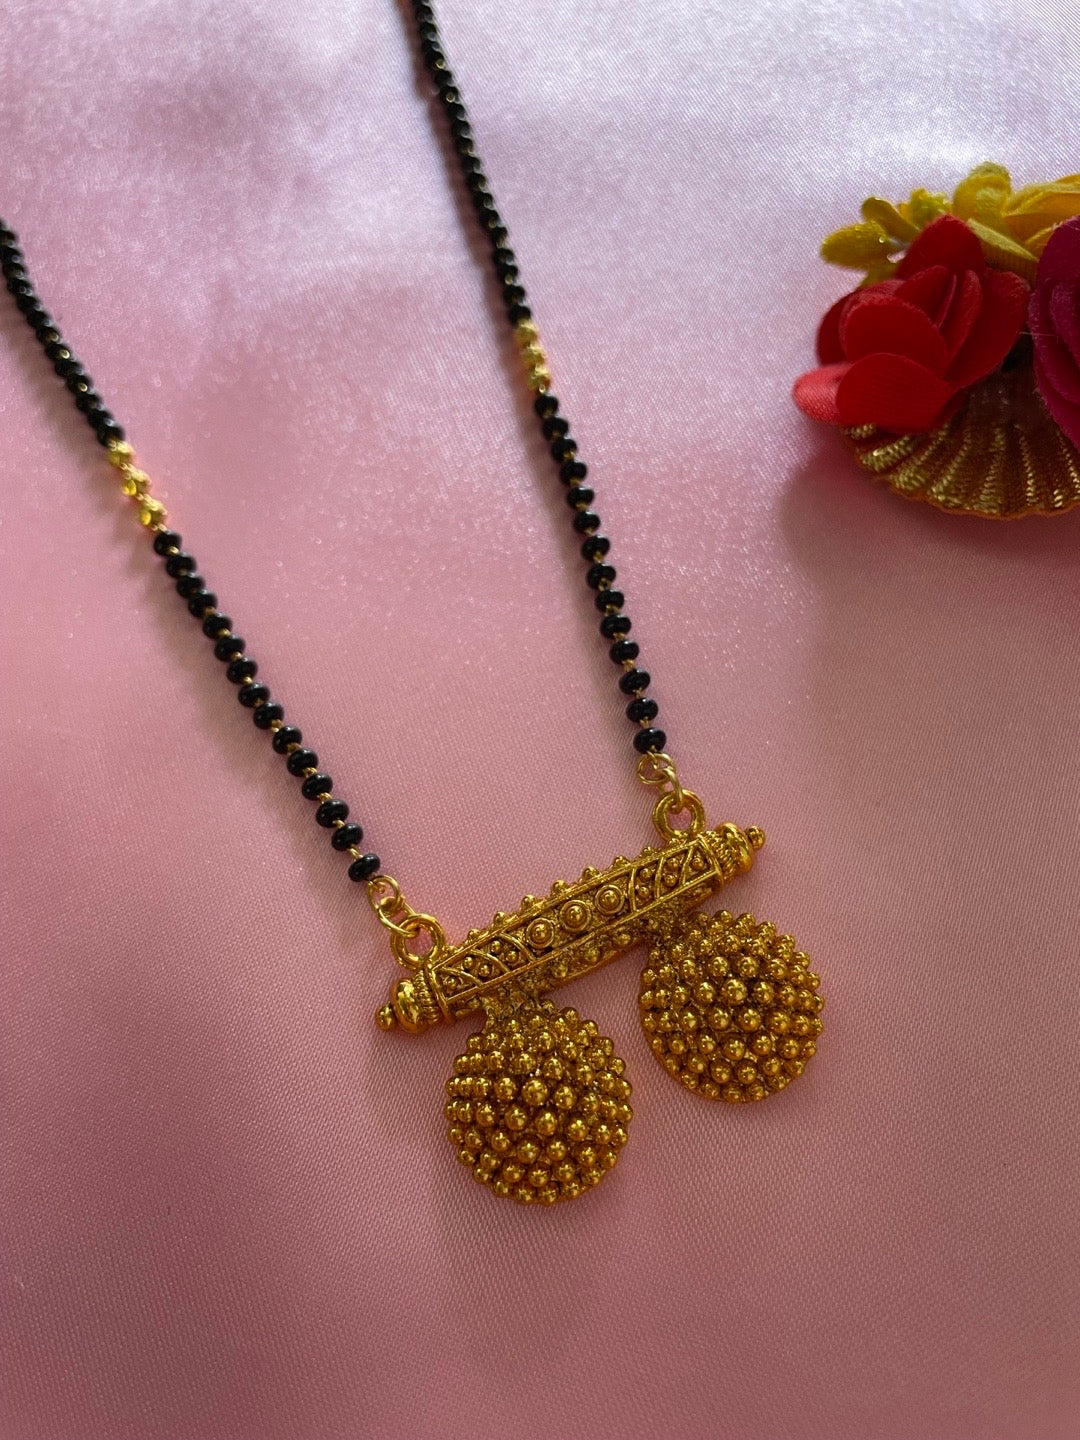 image for Gold Plated Maharashtrian Long Mangalsutra Gold Vati Pendant Black Bead Chain